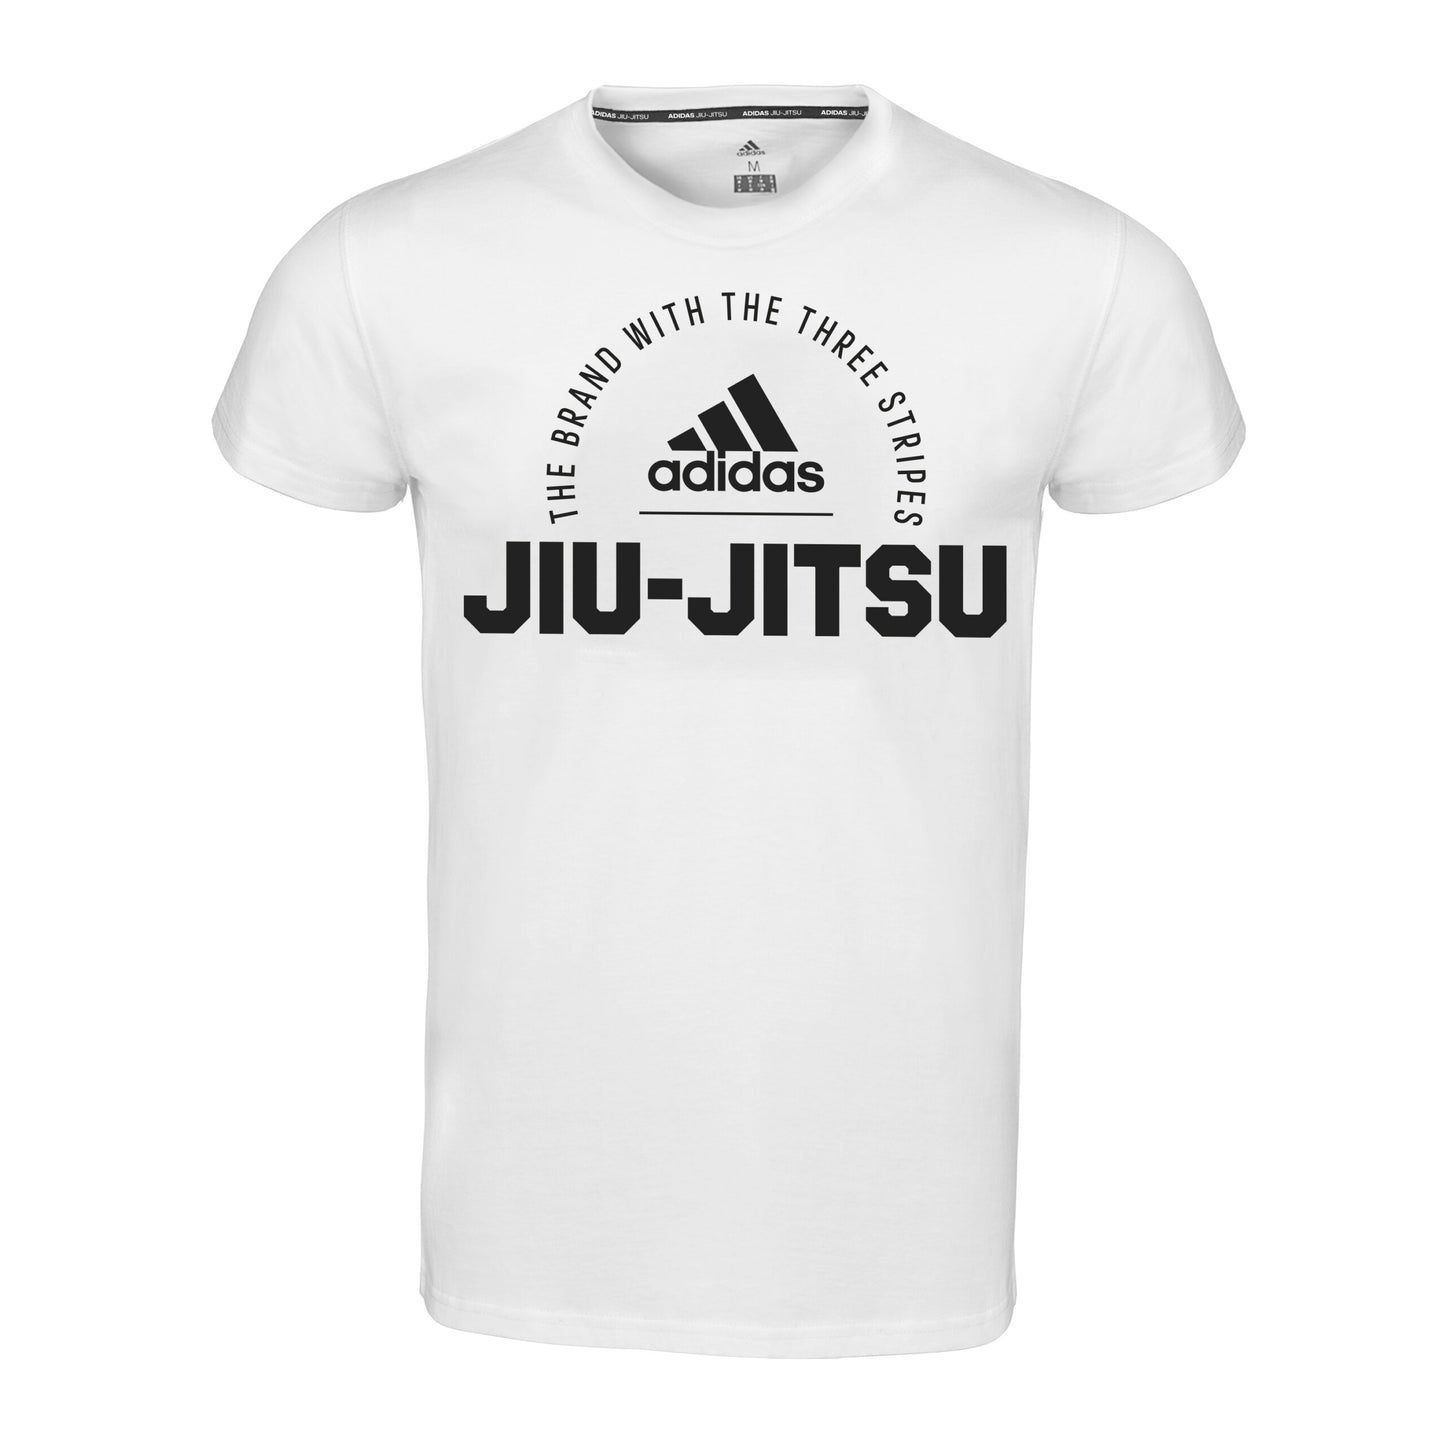 Clts21 Bjj Adidas Jiu Jitsu T Shirt White 01